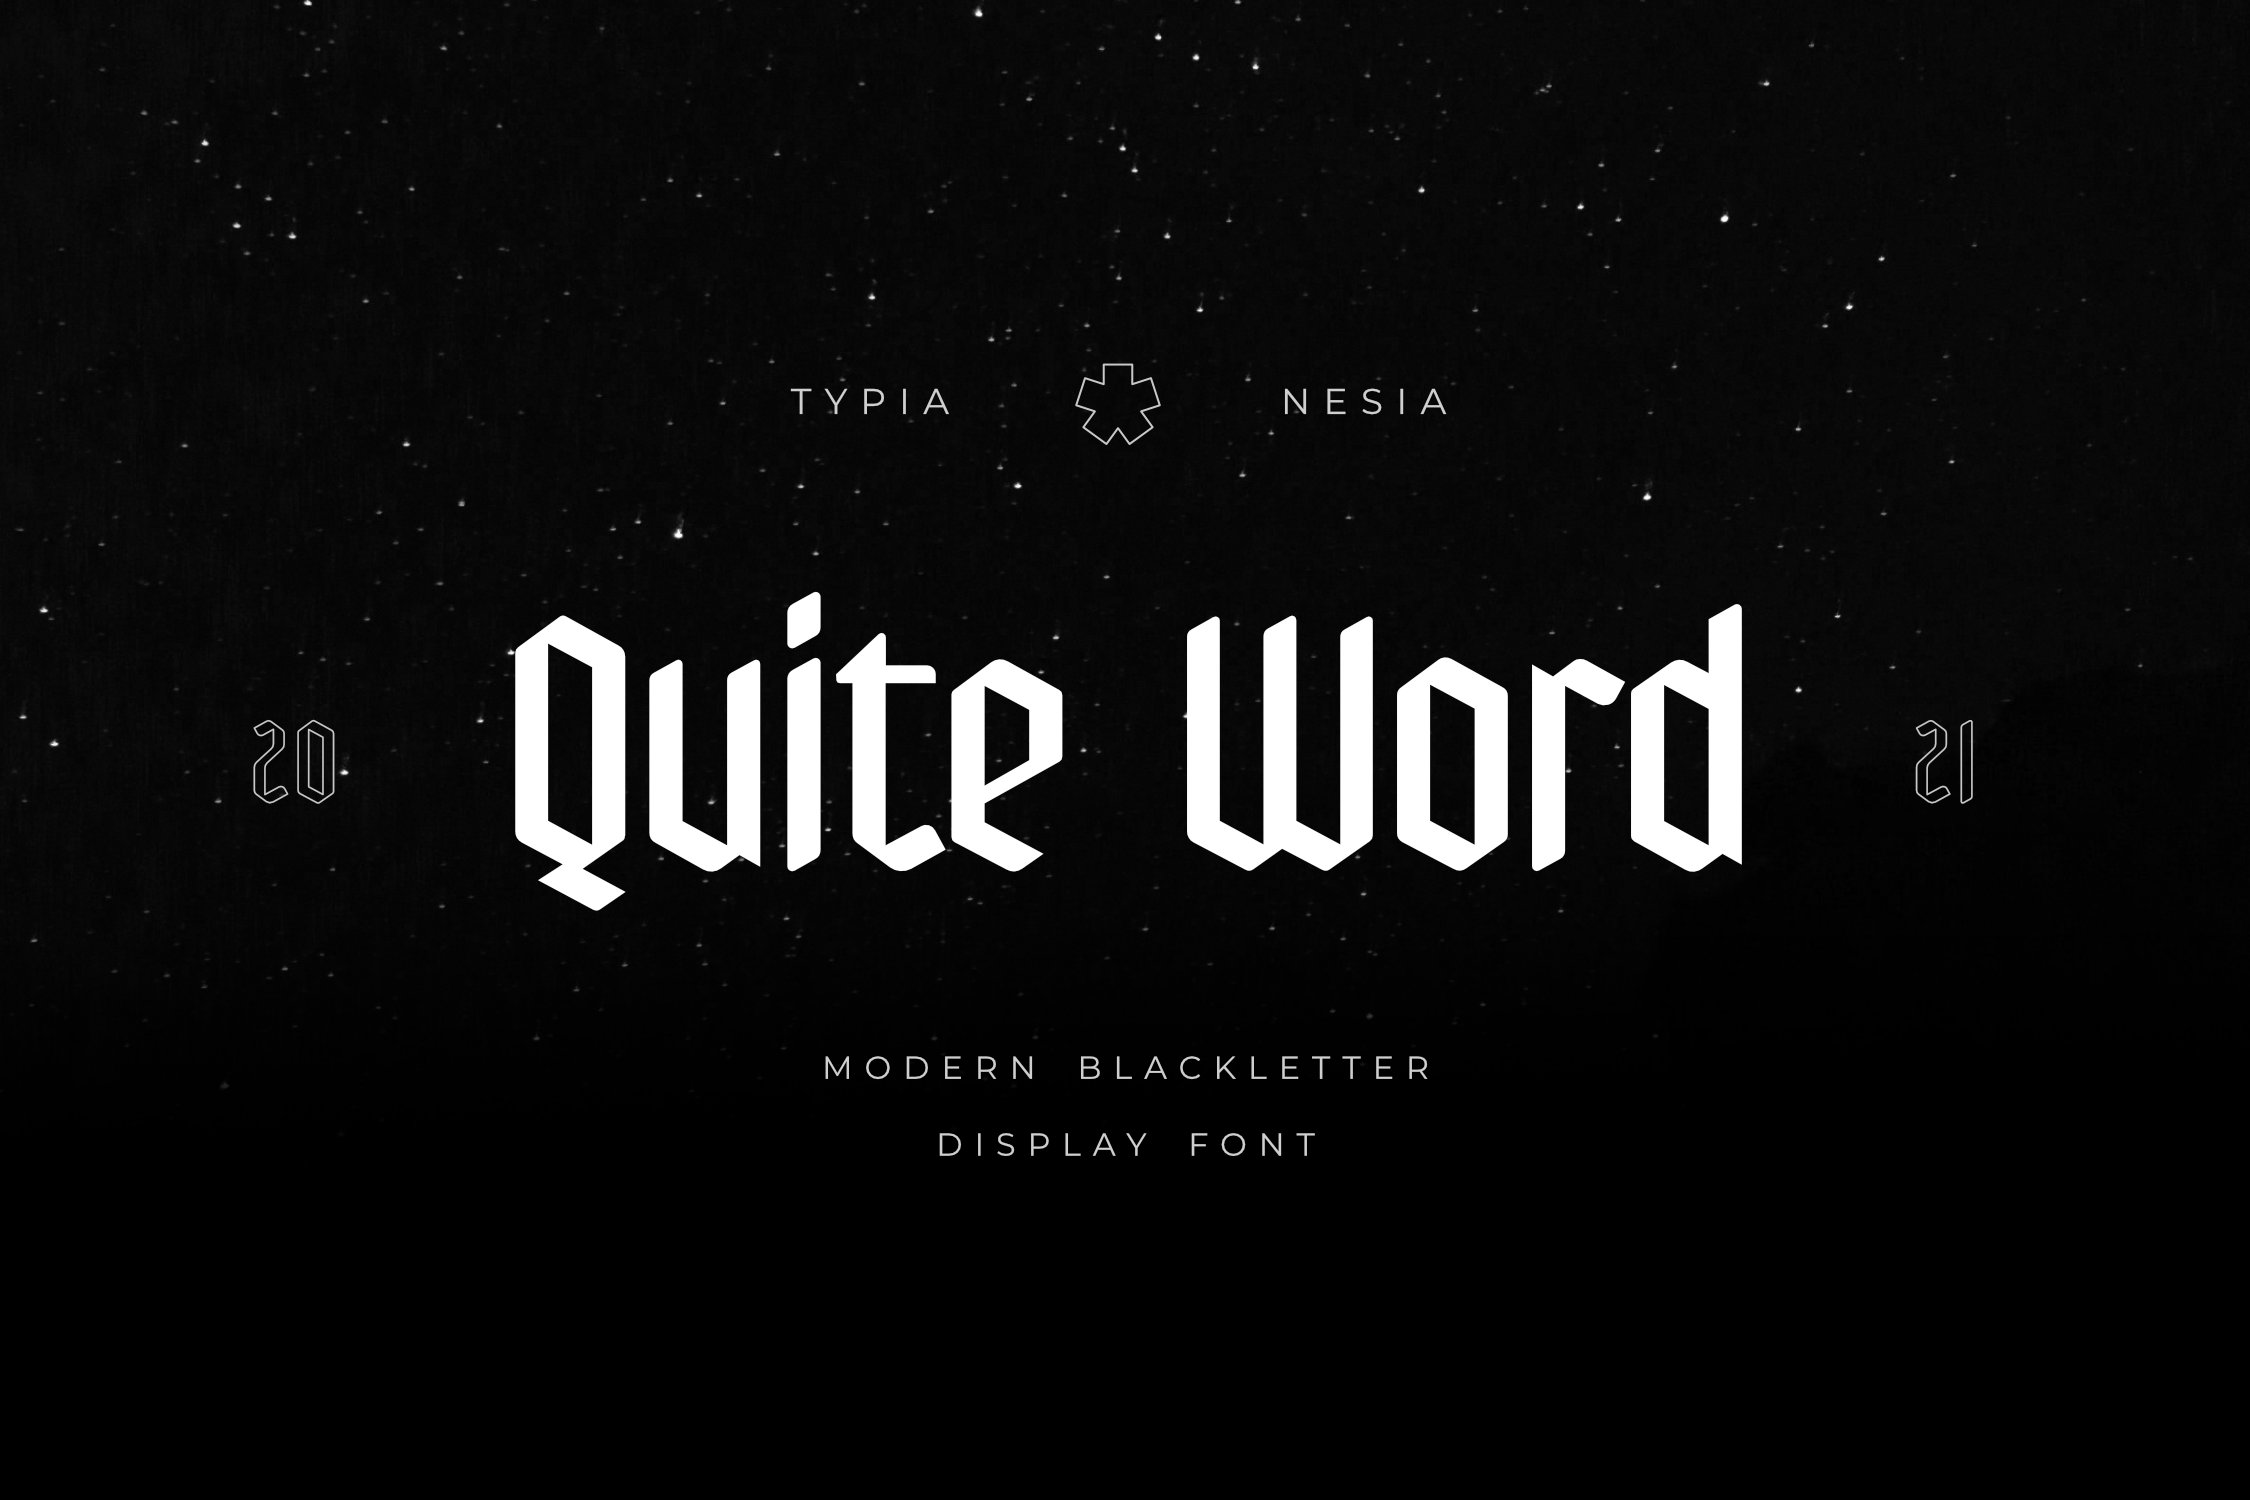 Quite Word - Modern Blackletter cover image.